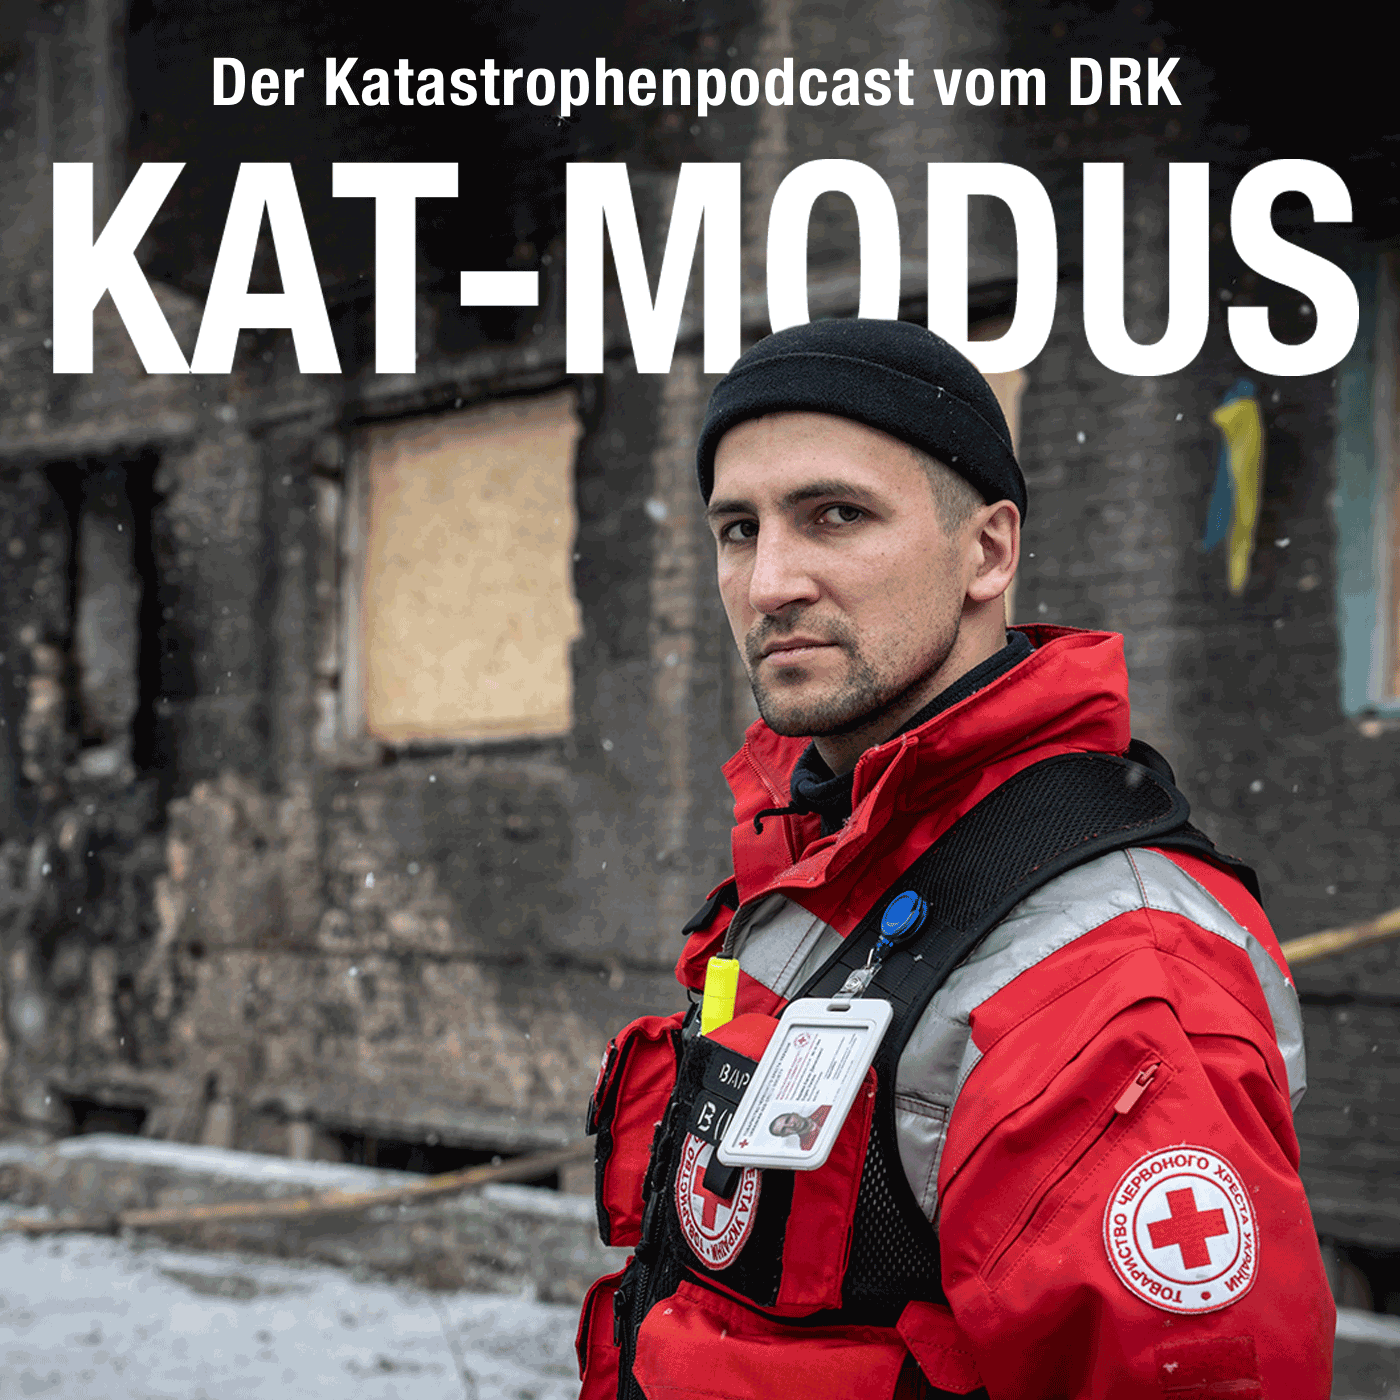 KAT-MODUS: Der Katastrophenpodcast vom DRK